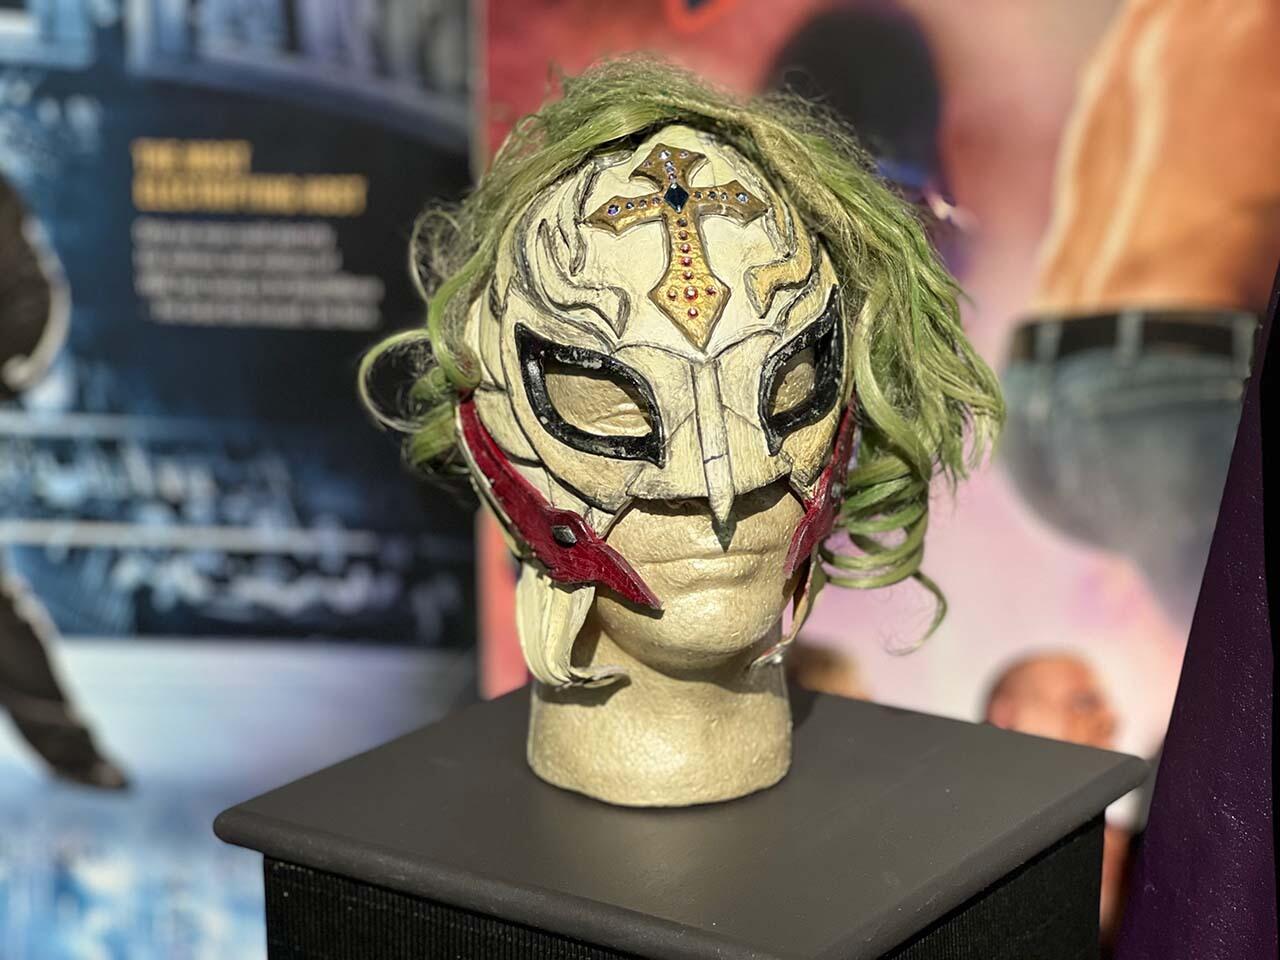 Rey Mysterio's mask